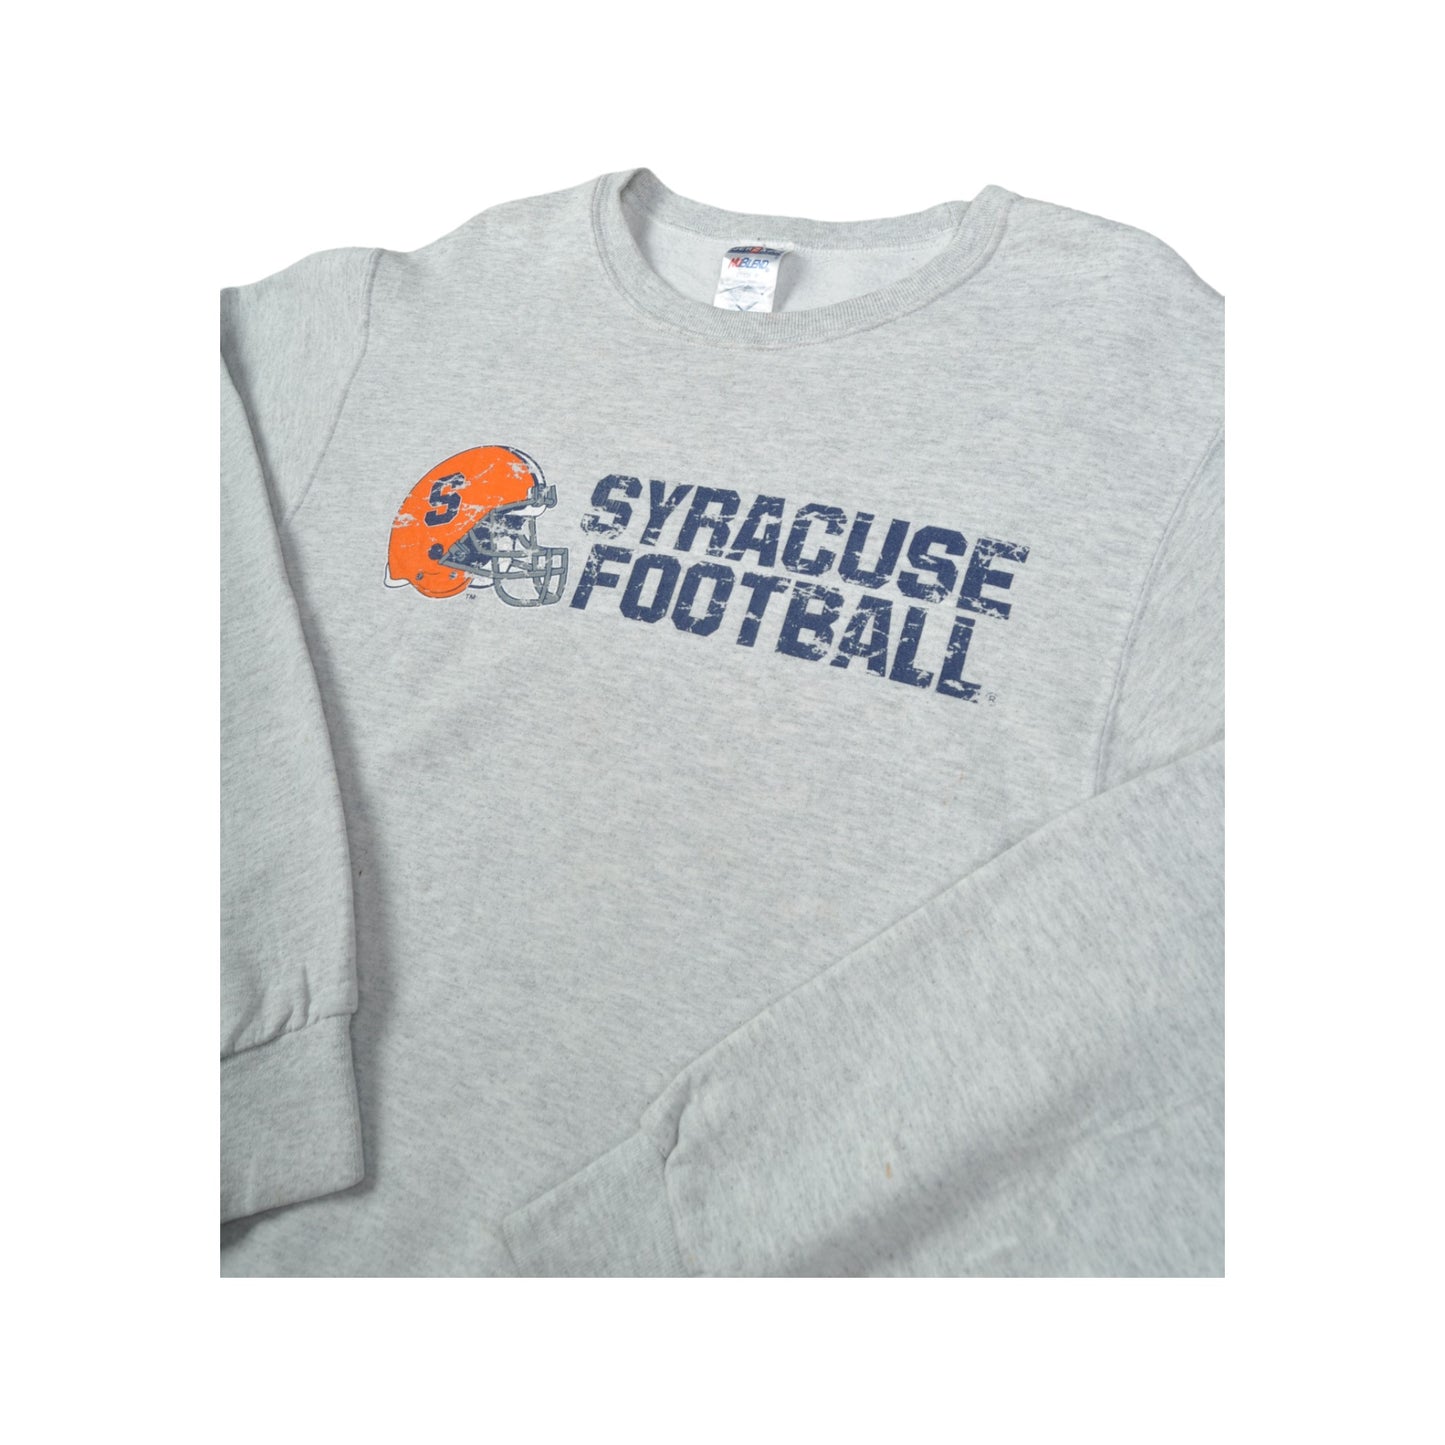 Vintage Syracuse Football Sweater Grey Small